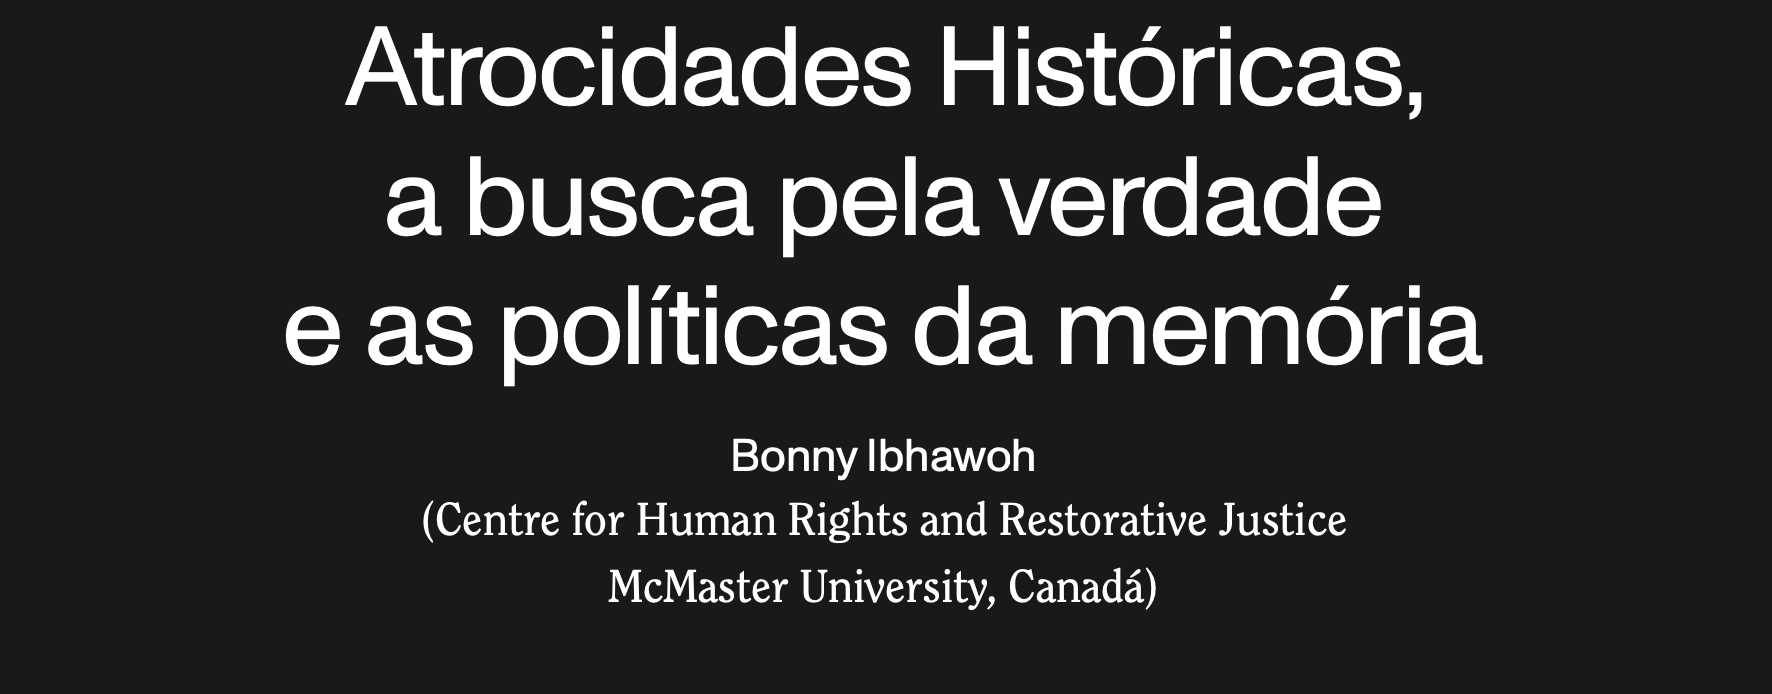 Conferência por Bonny Ibhawoh (McMaster University, Canadá)